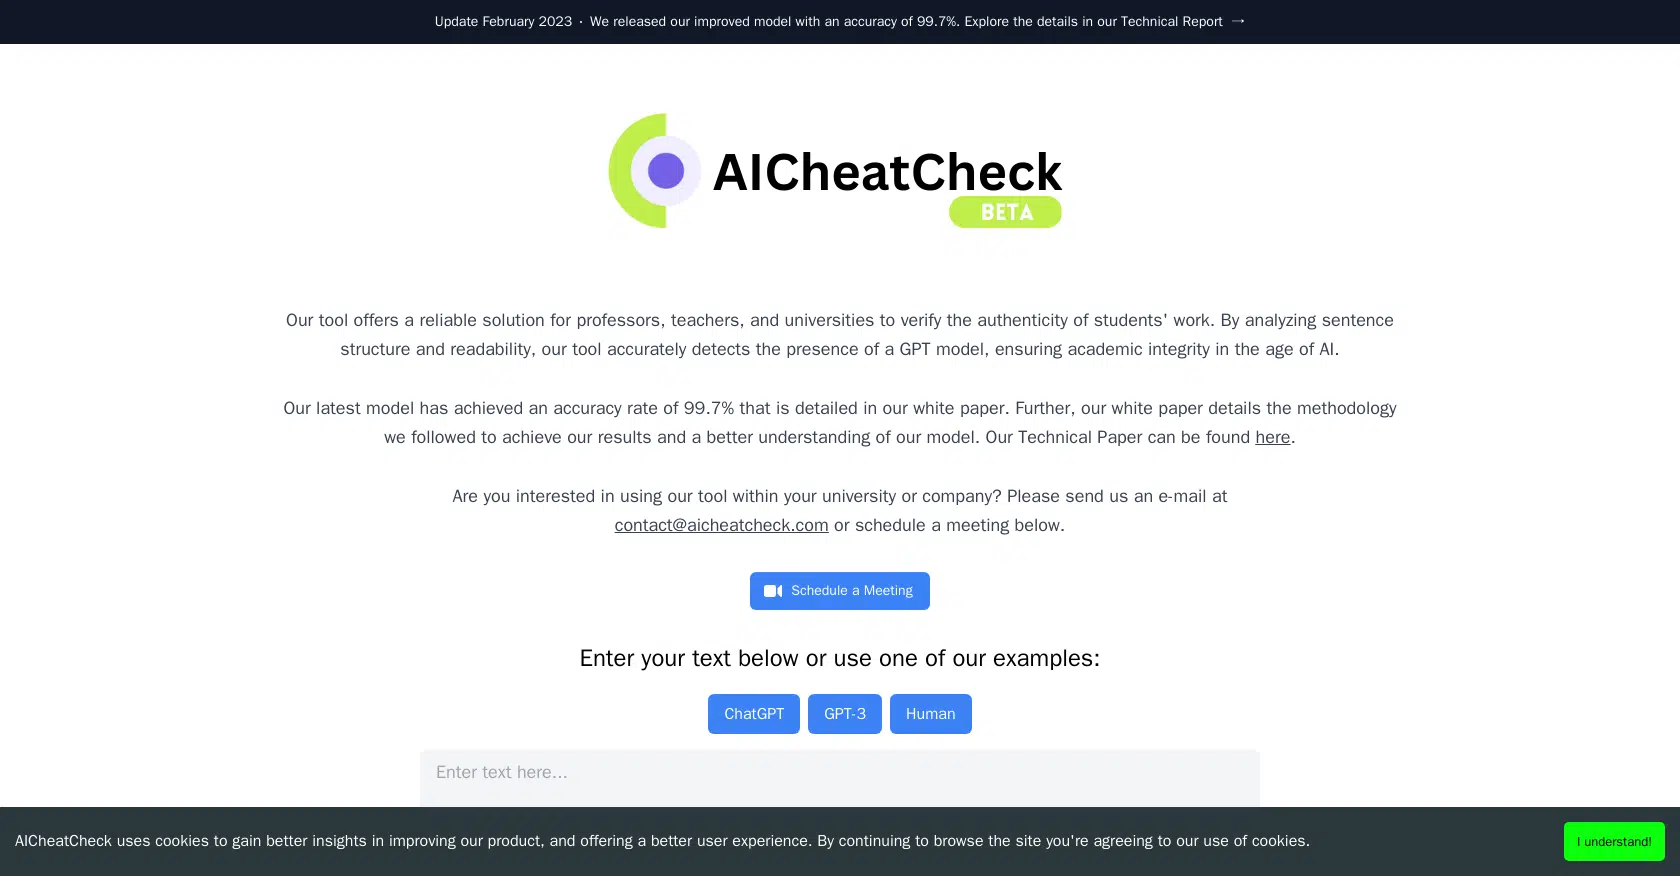 AICheatCheckwebsite picture